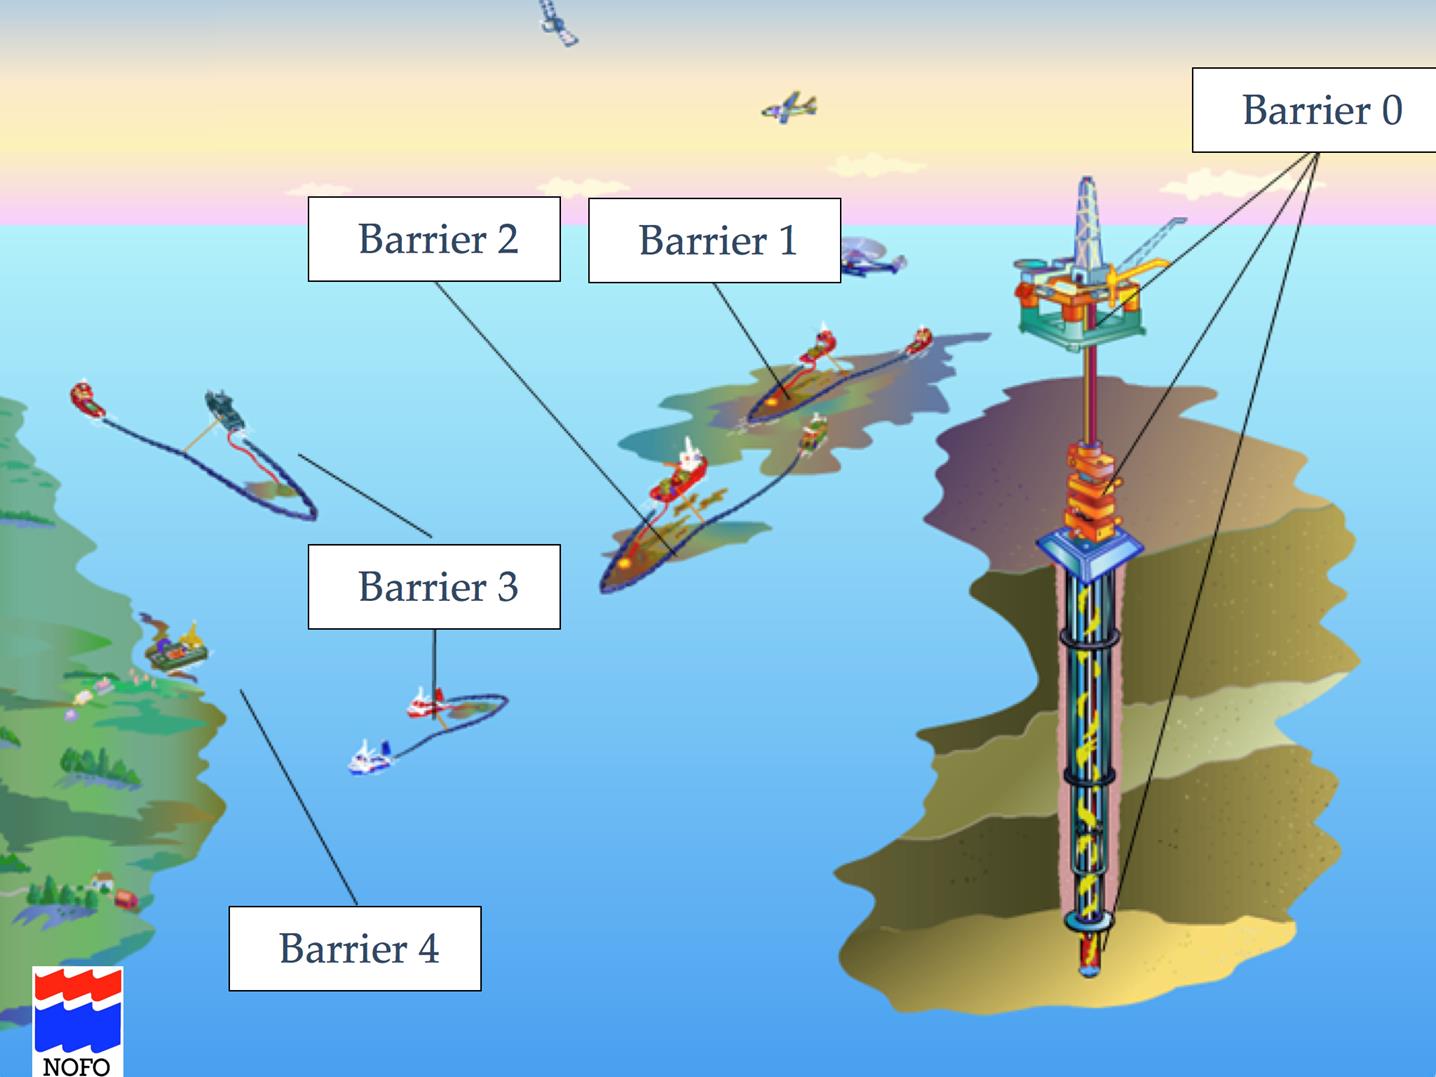 Ressurser fra Barriere og 2 kan benyttes i kystnært